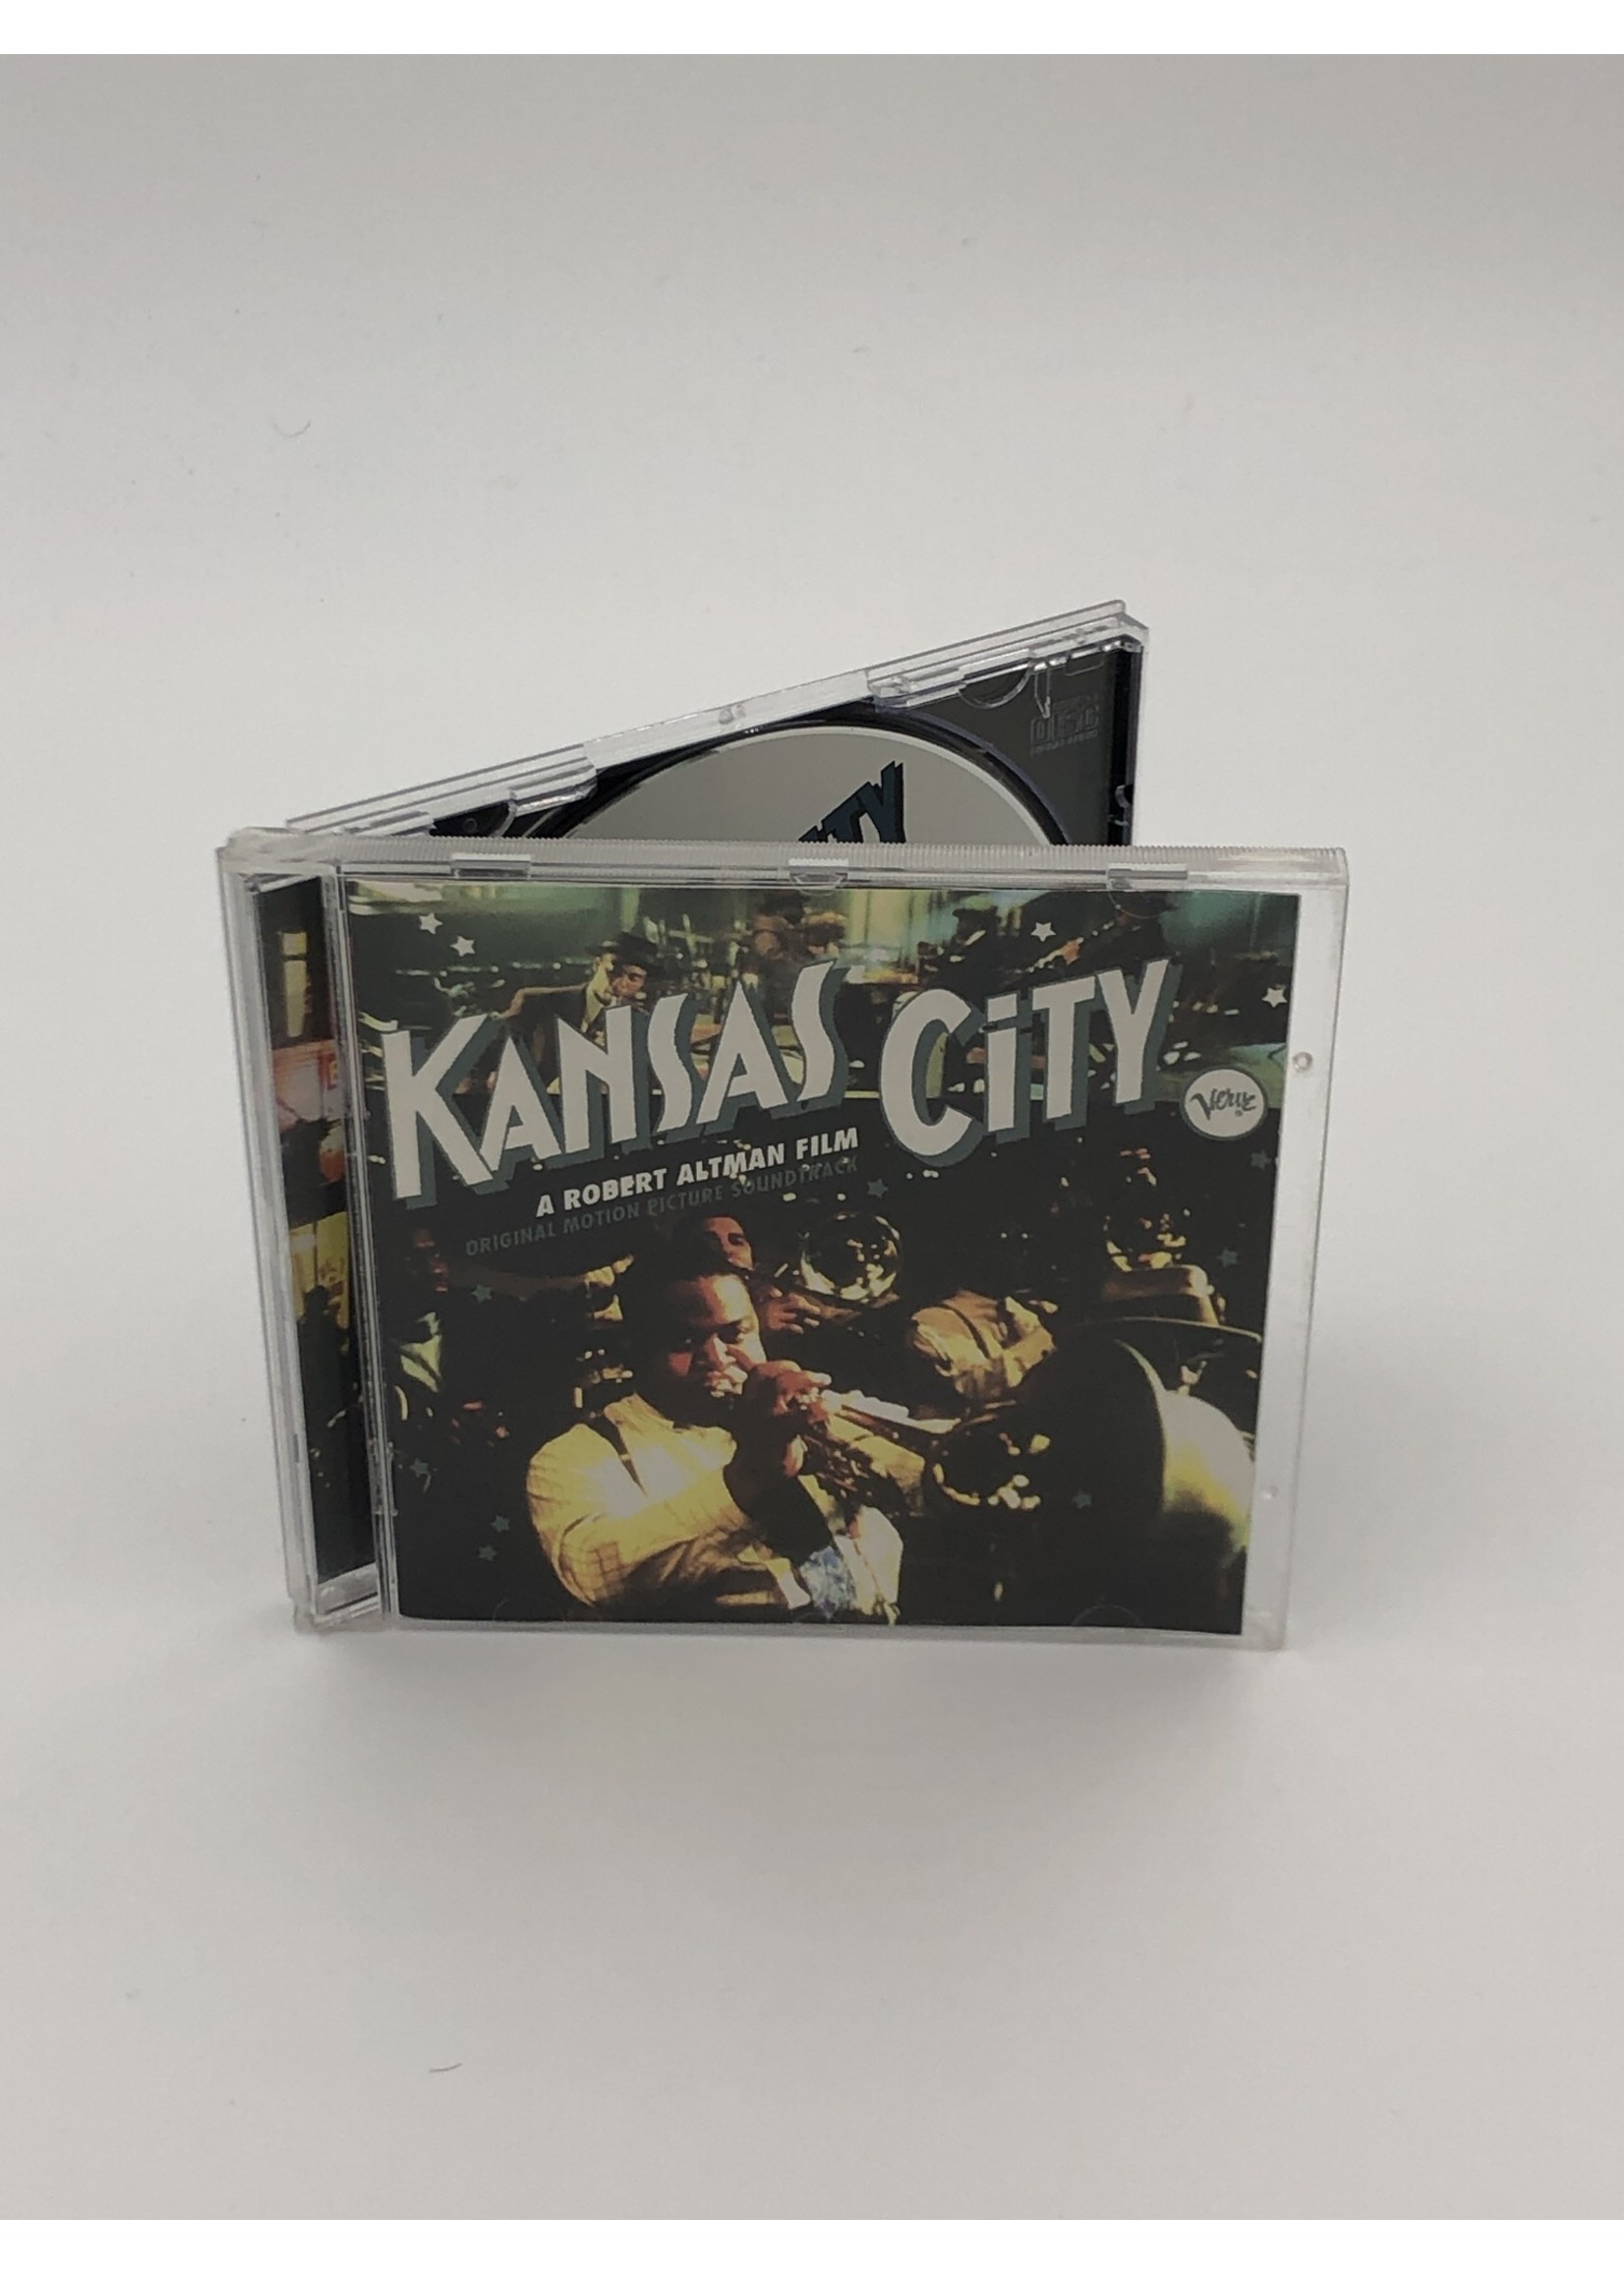 CD Kansas City: Motion Picture Soundtrack CD